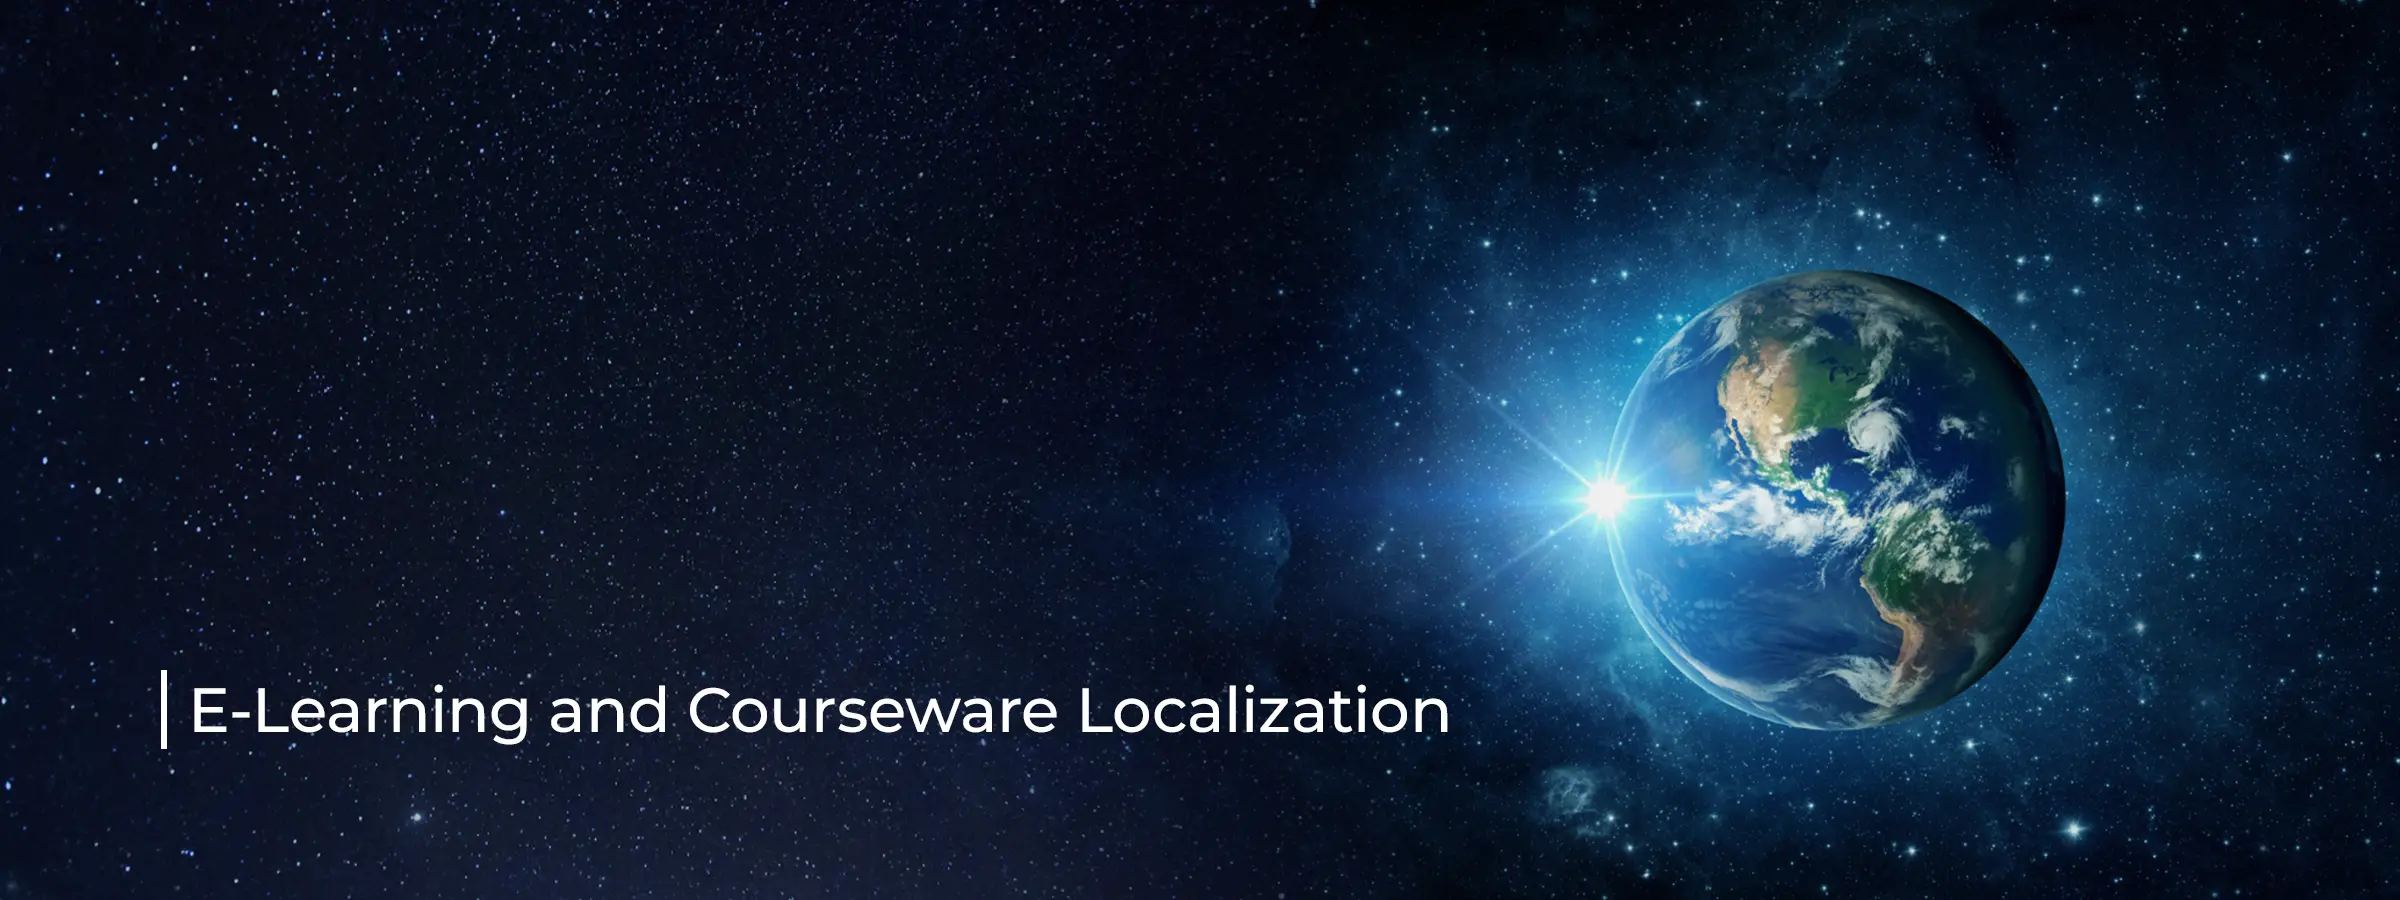 e-learning-courseware-localization-service-banner